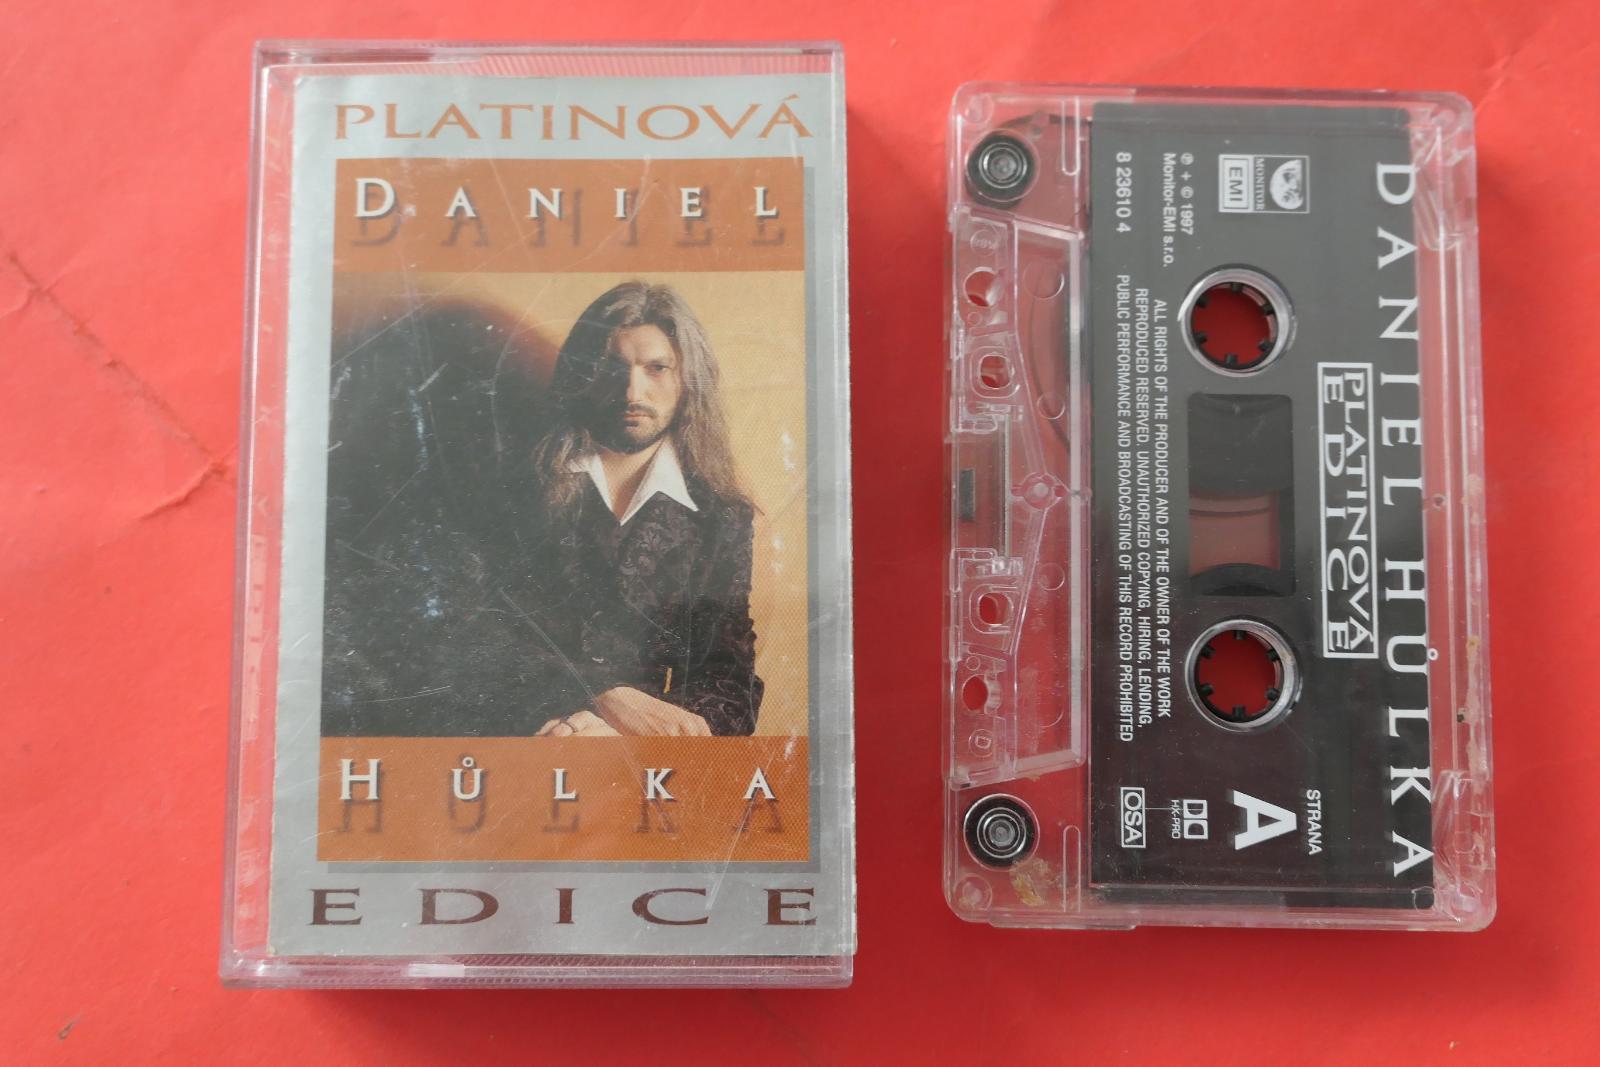 MC kazeta Daniel Hůlka: Platinová edice (1997)  - Hudba